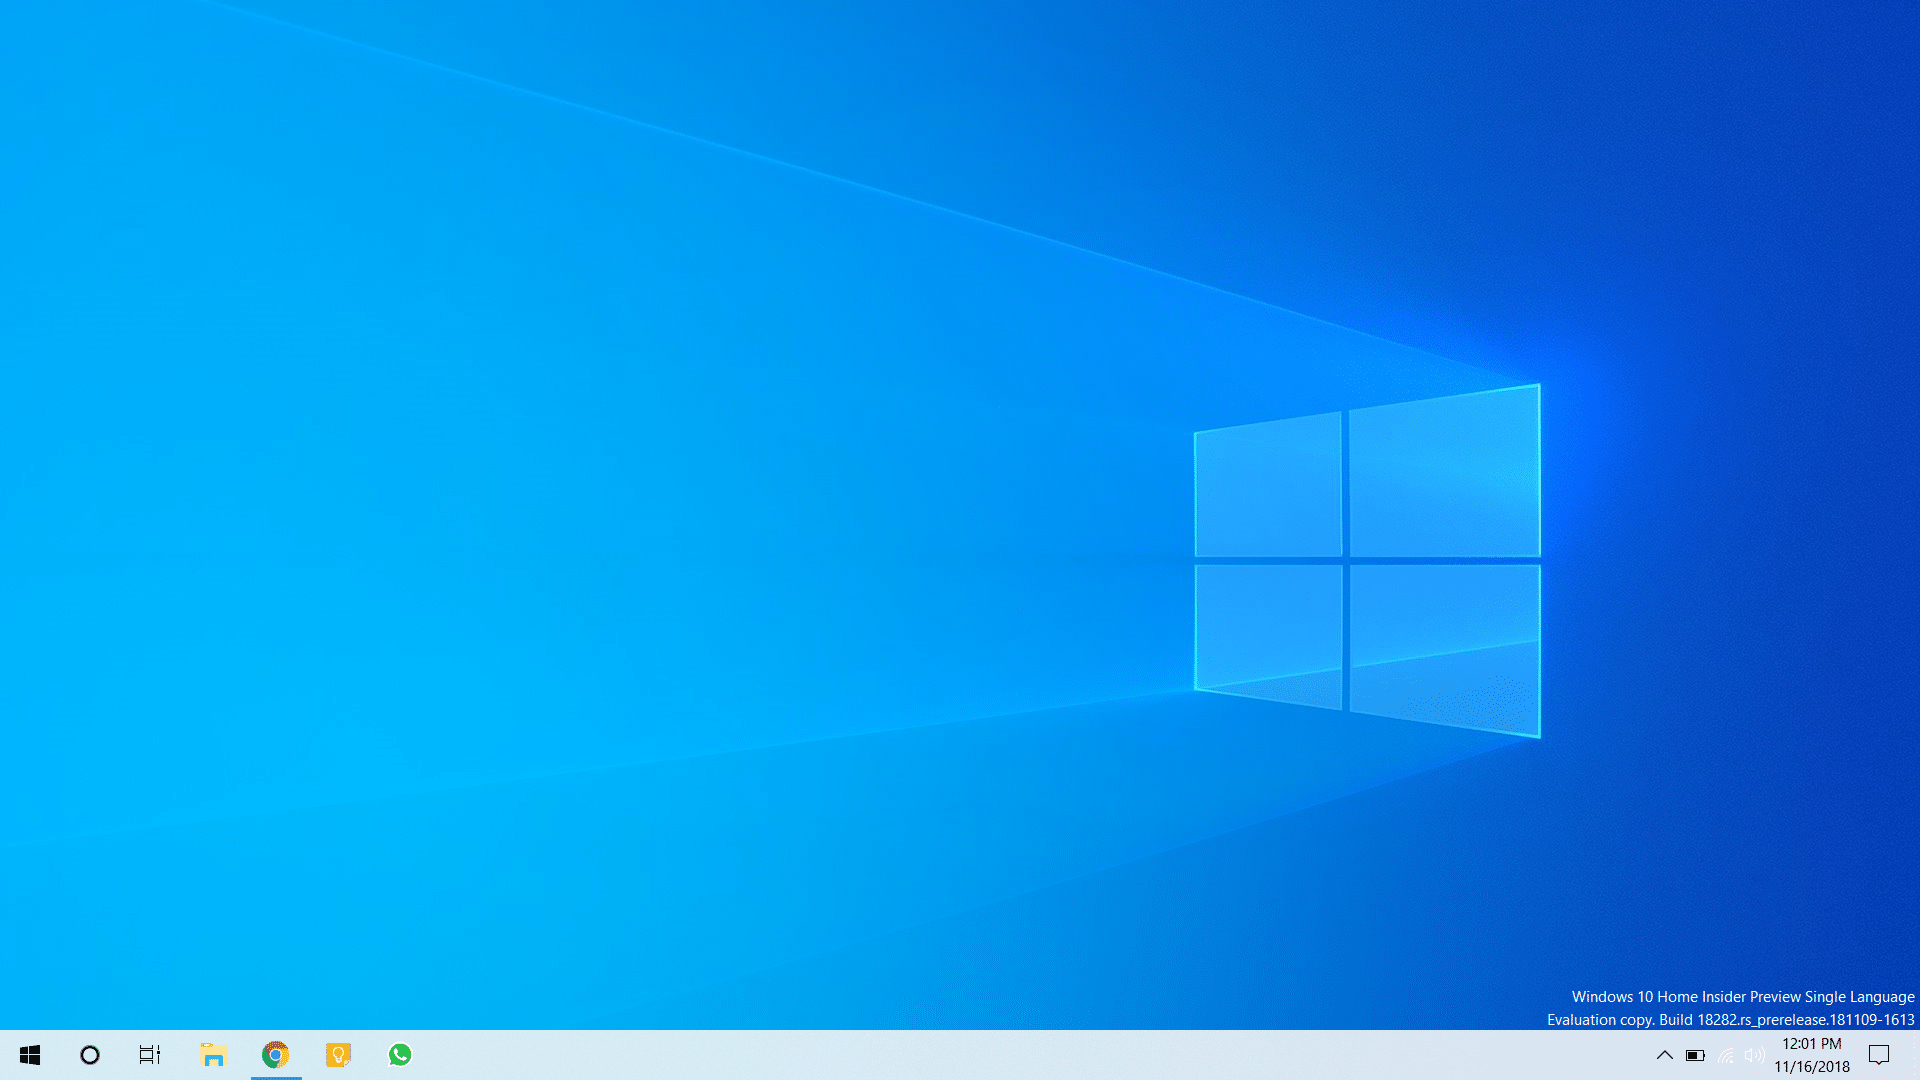 New wallpaper in Windows 10